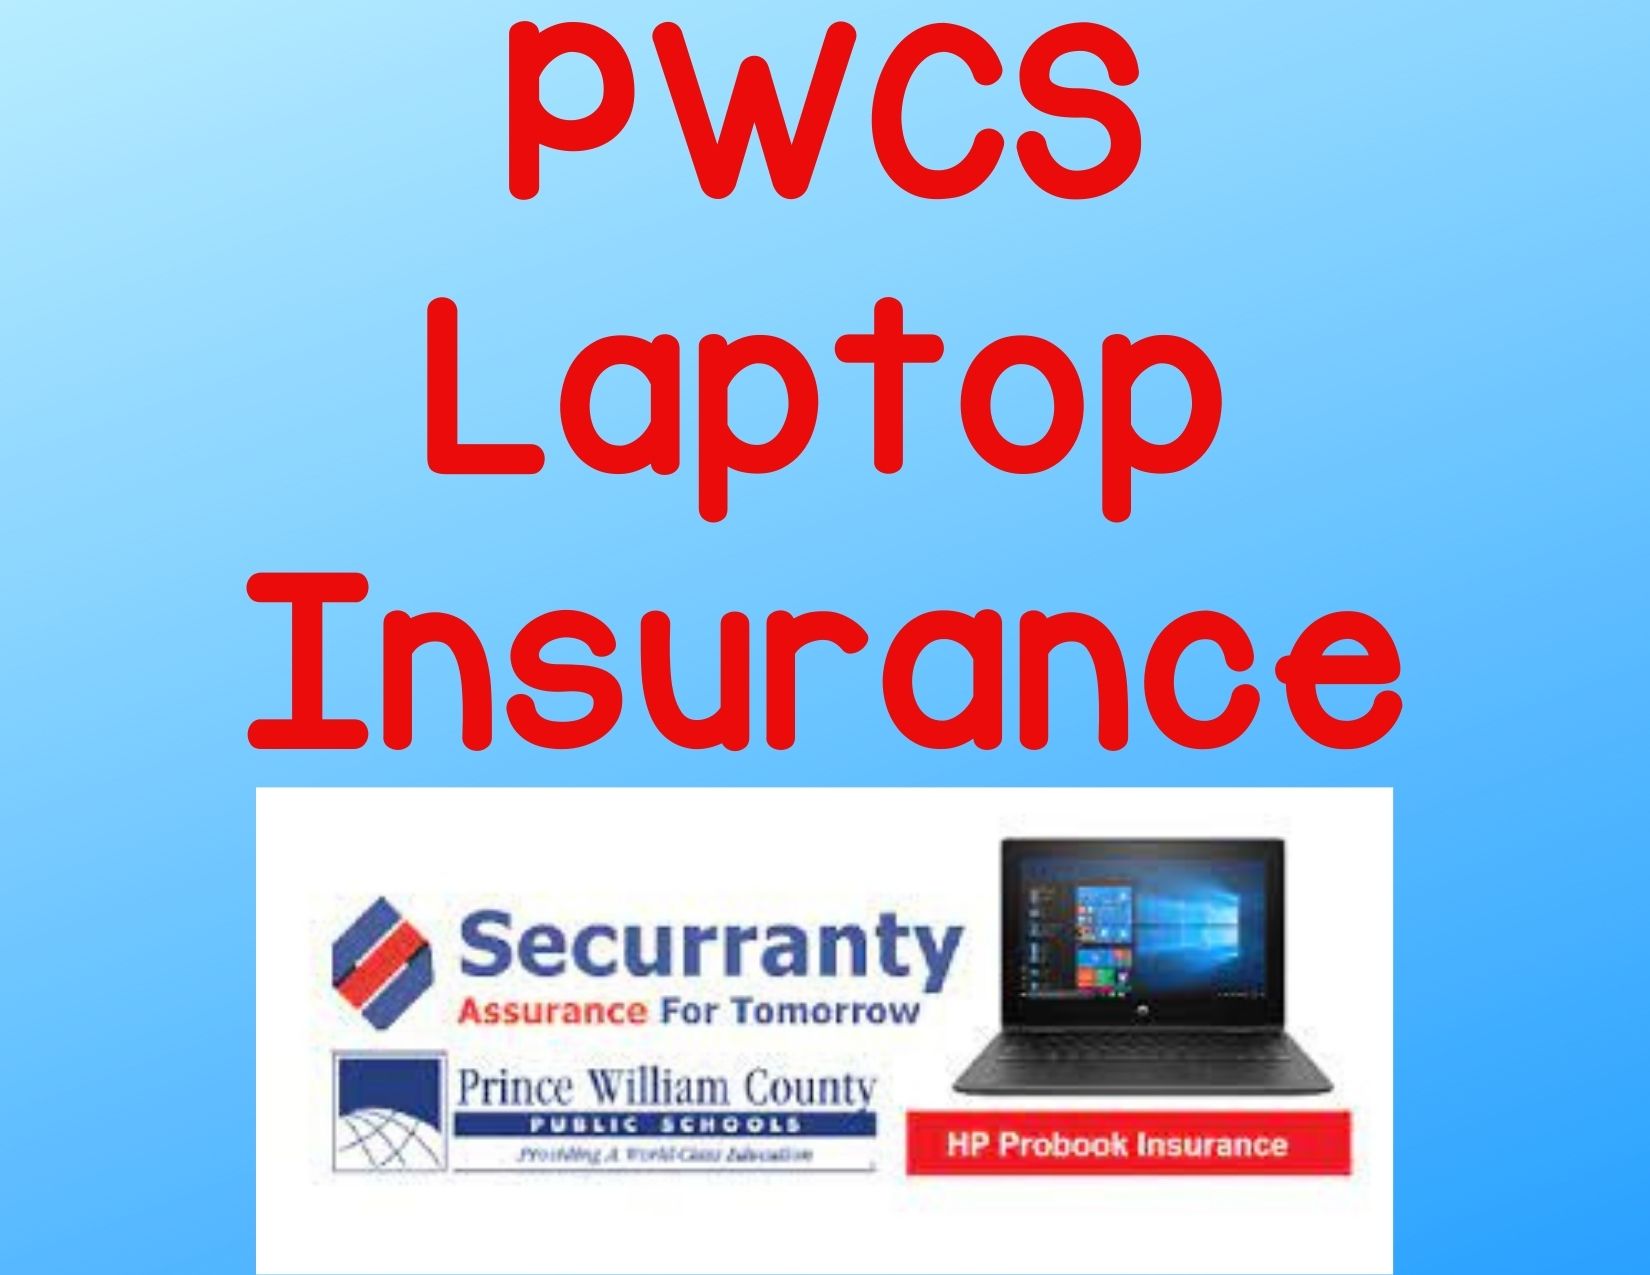 PWCS Laptop Insurance